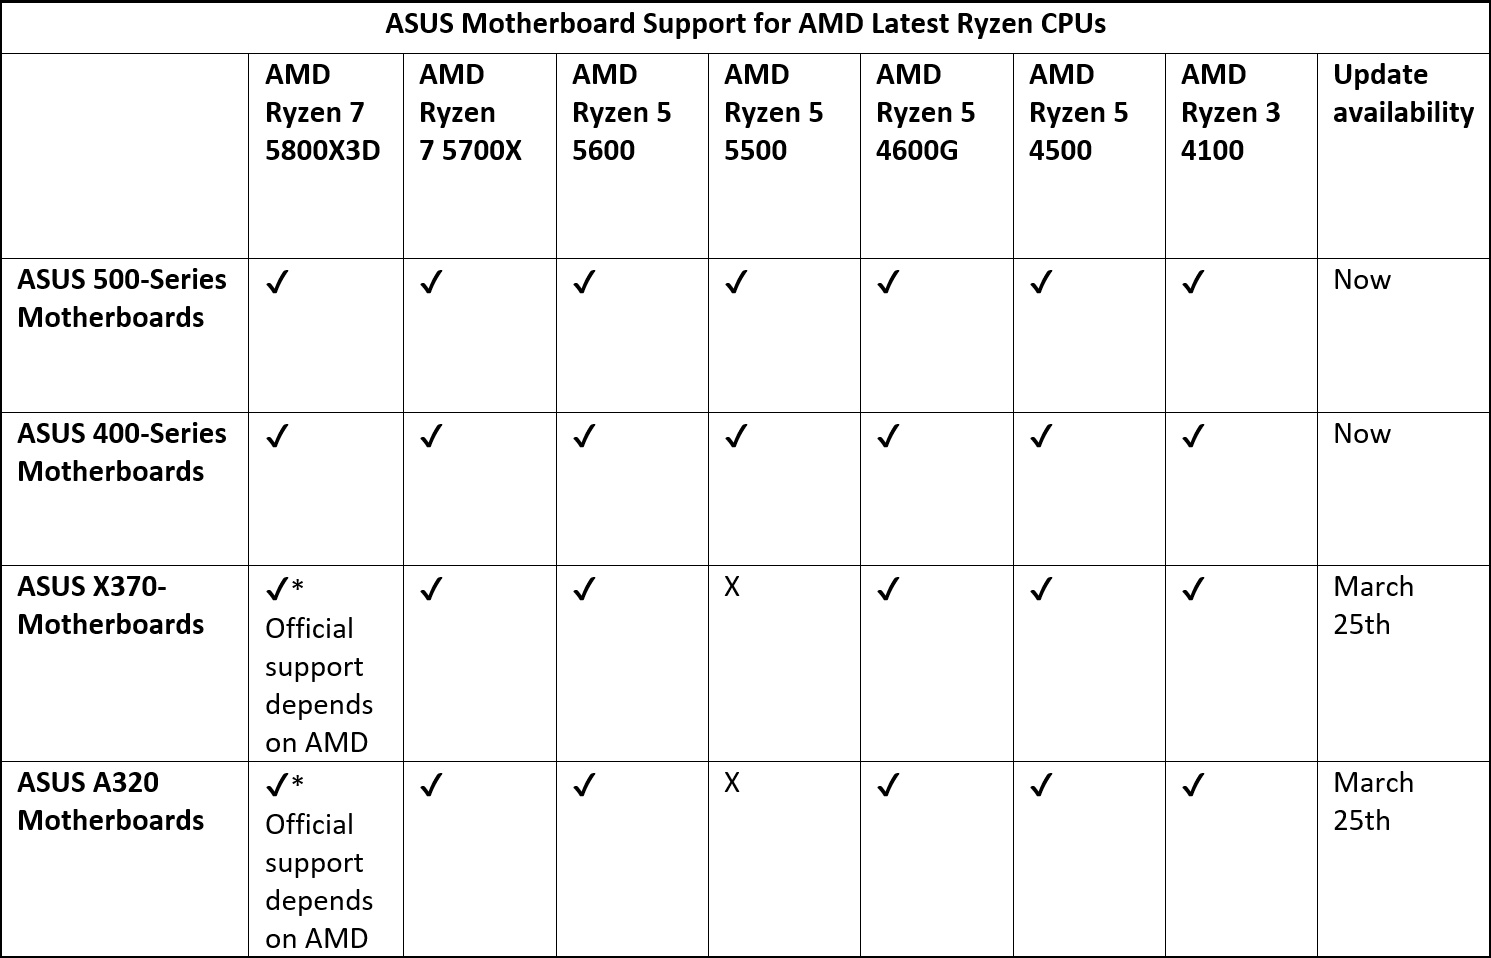 amd ryzen motherboard support 1 เมนบอร์ด ASUS แพลตฟอร์ม AMD ในชิปเซ็ต 500, 400, A320 และ X370 series พร้อมรองรับซีพียูรุ่นใหม่ Ryzen 5000/4000ซีรี่ย์รุ่นใหม่ล่าสุดทุกรุ่น 